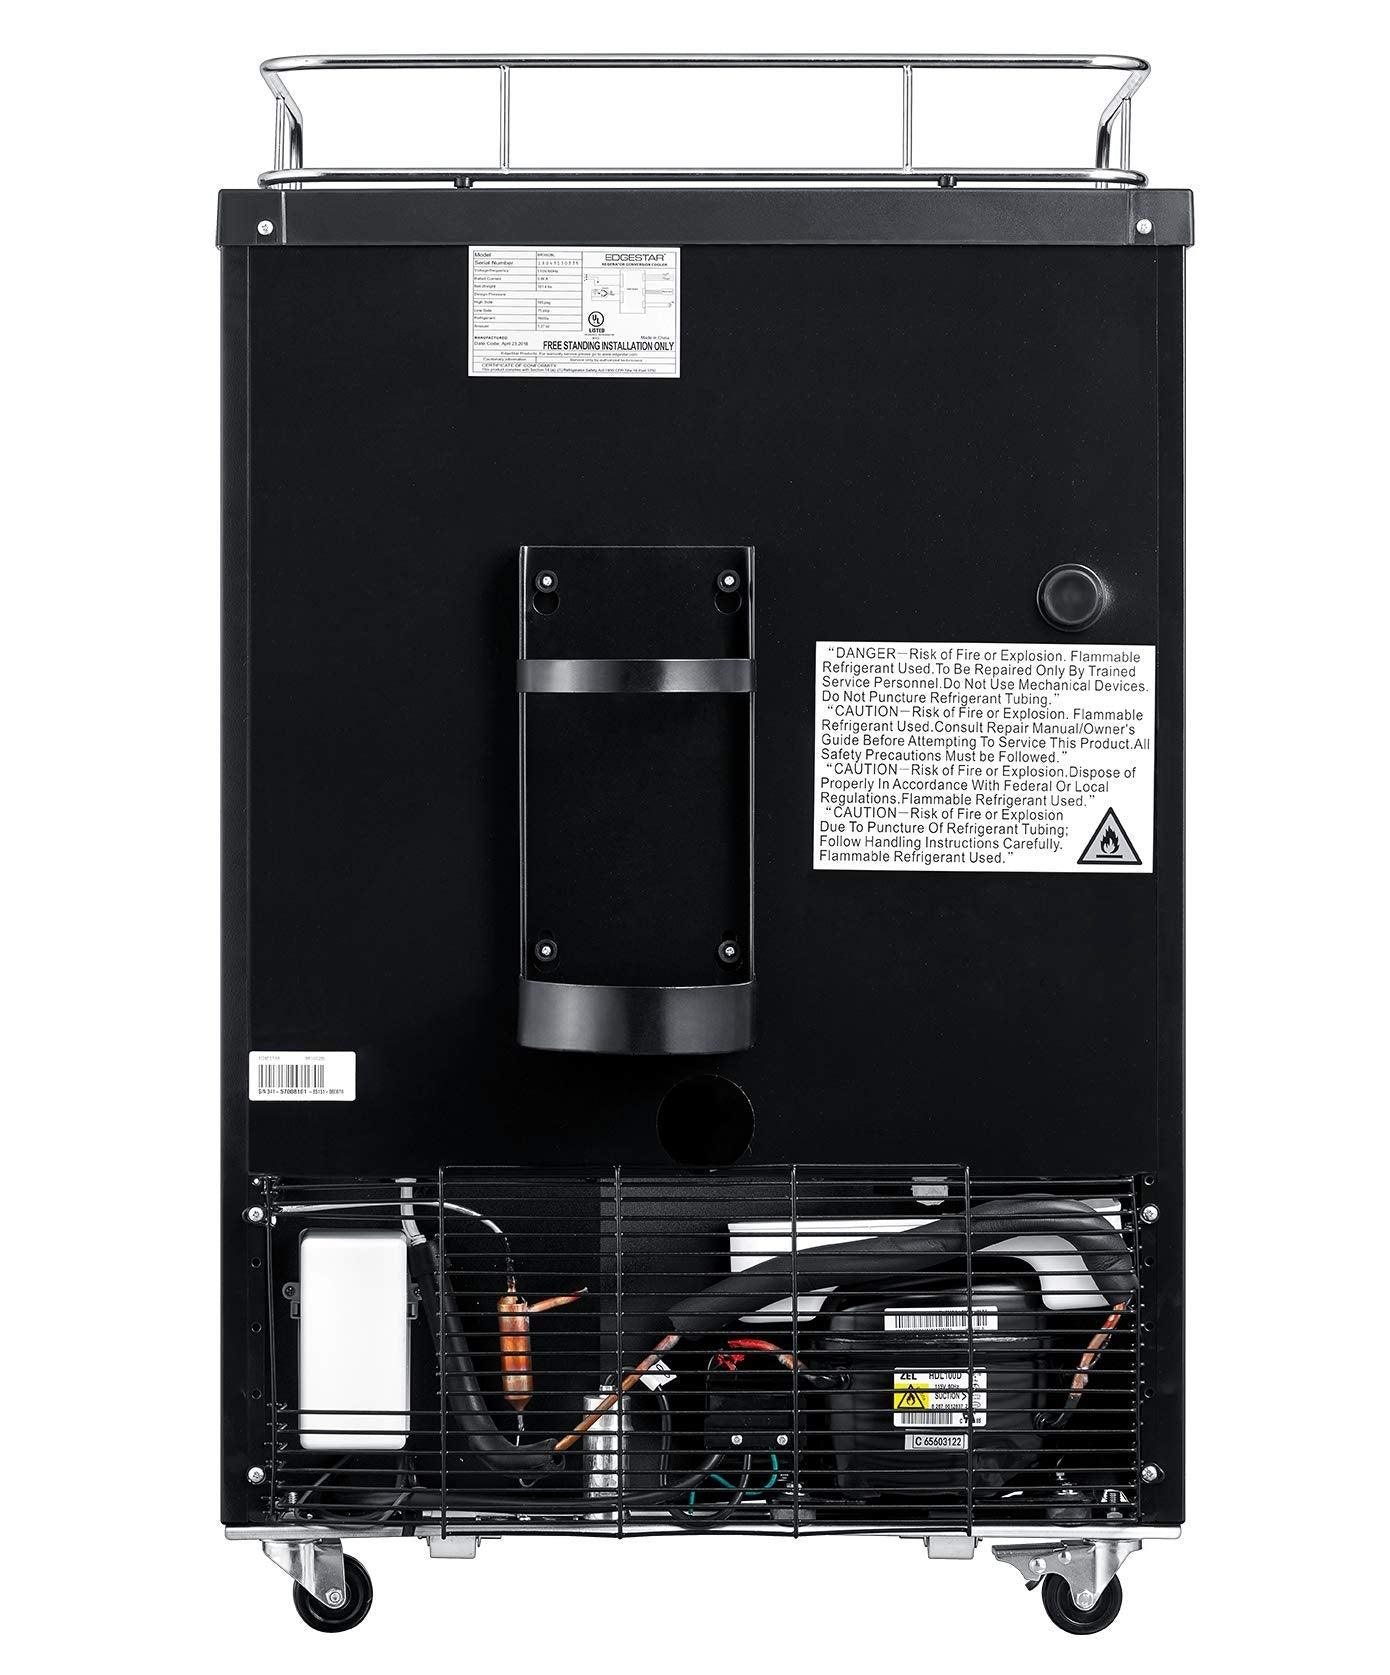 EdgeStar BR3002BL 24 Inch Wide Kegerator Conversion Refrigerator for Full Size Keg - Black - CookCave